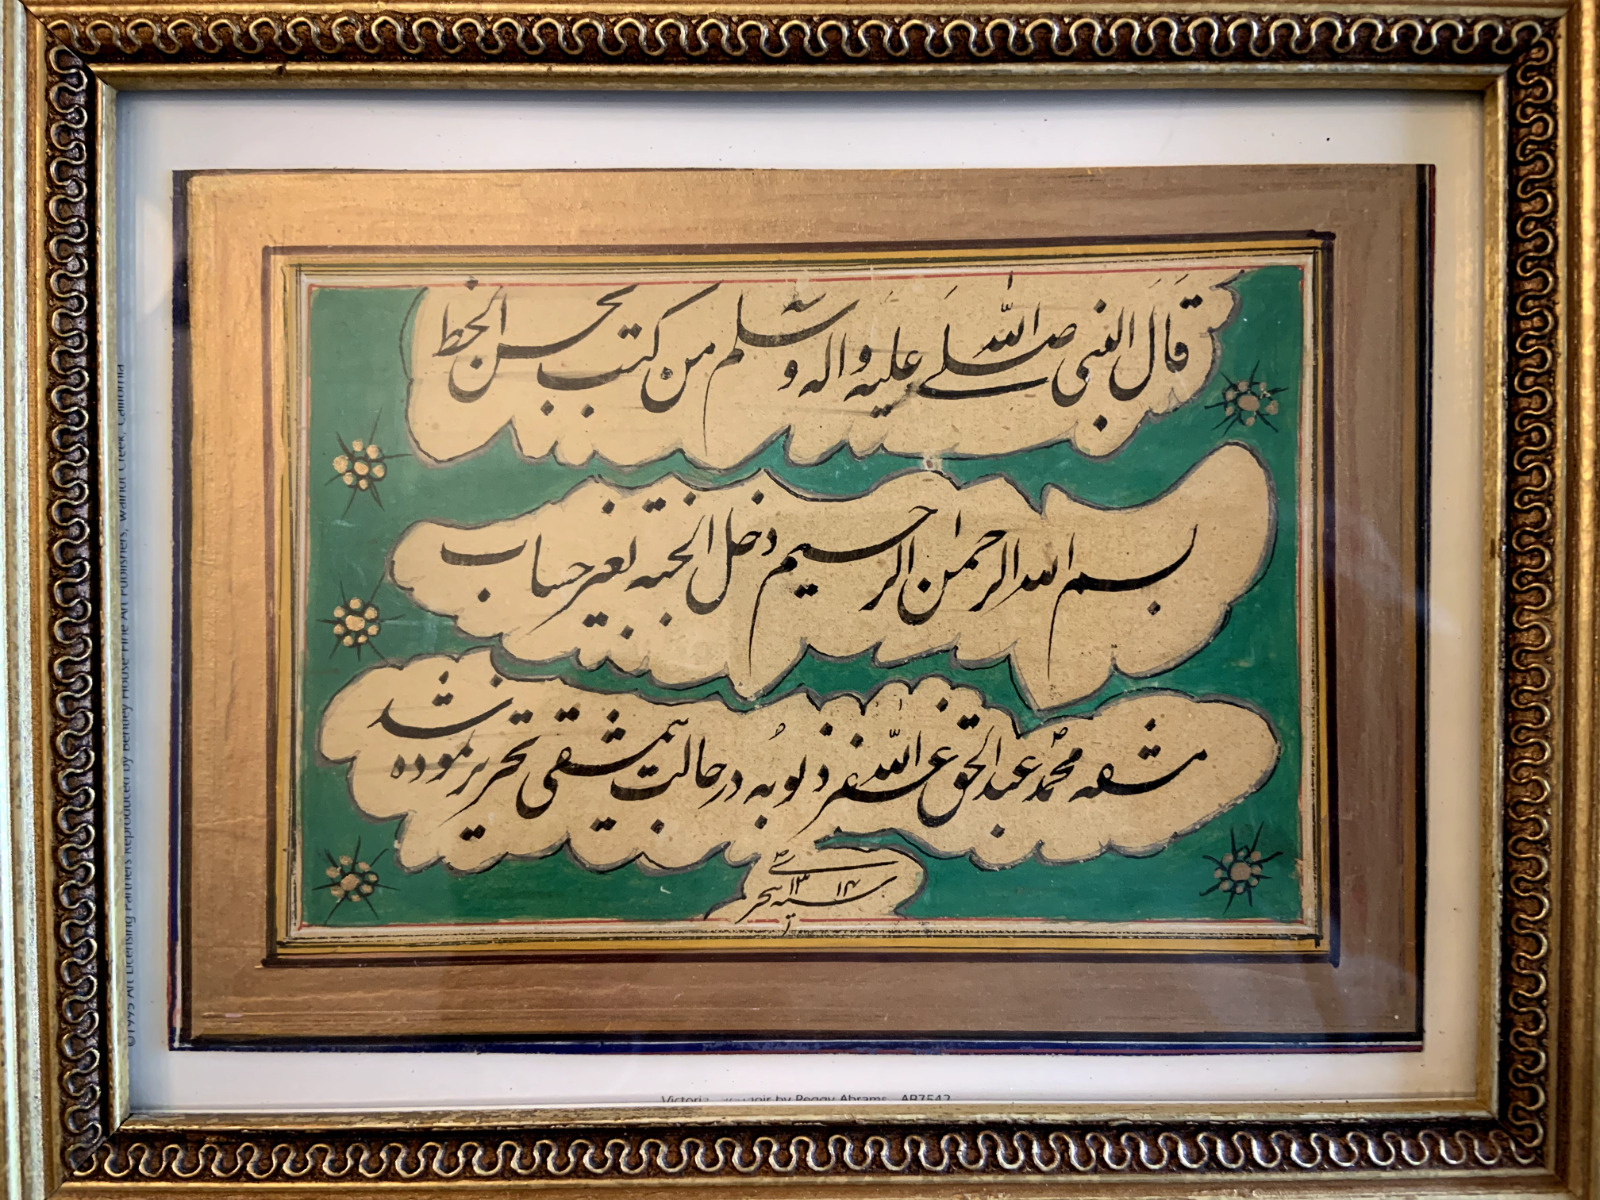 Antique Islamic Calligraphy By Mohammad Abul Haq 1313 Hijri Qajar Dynasty Signed